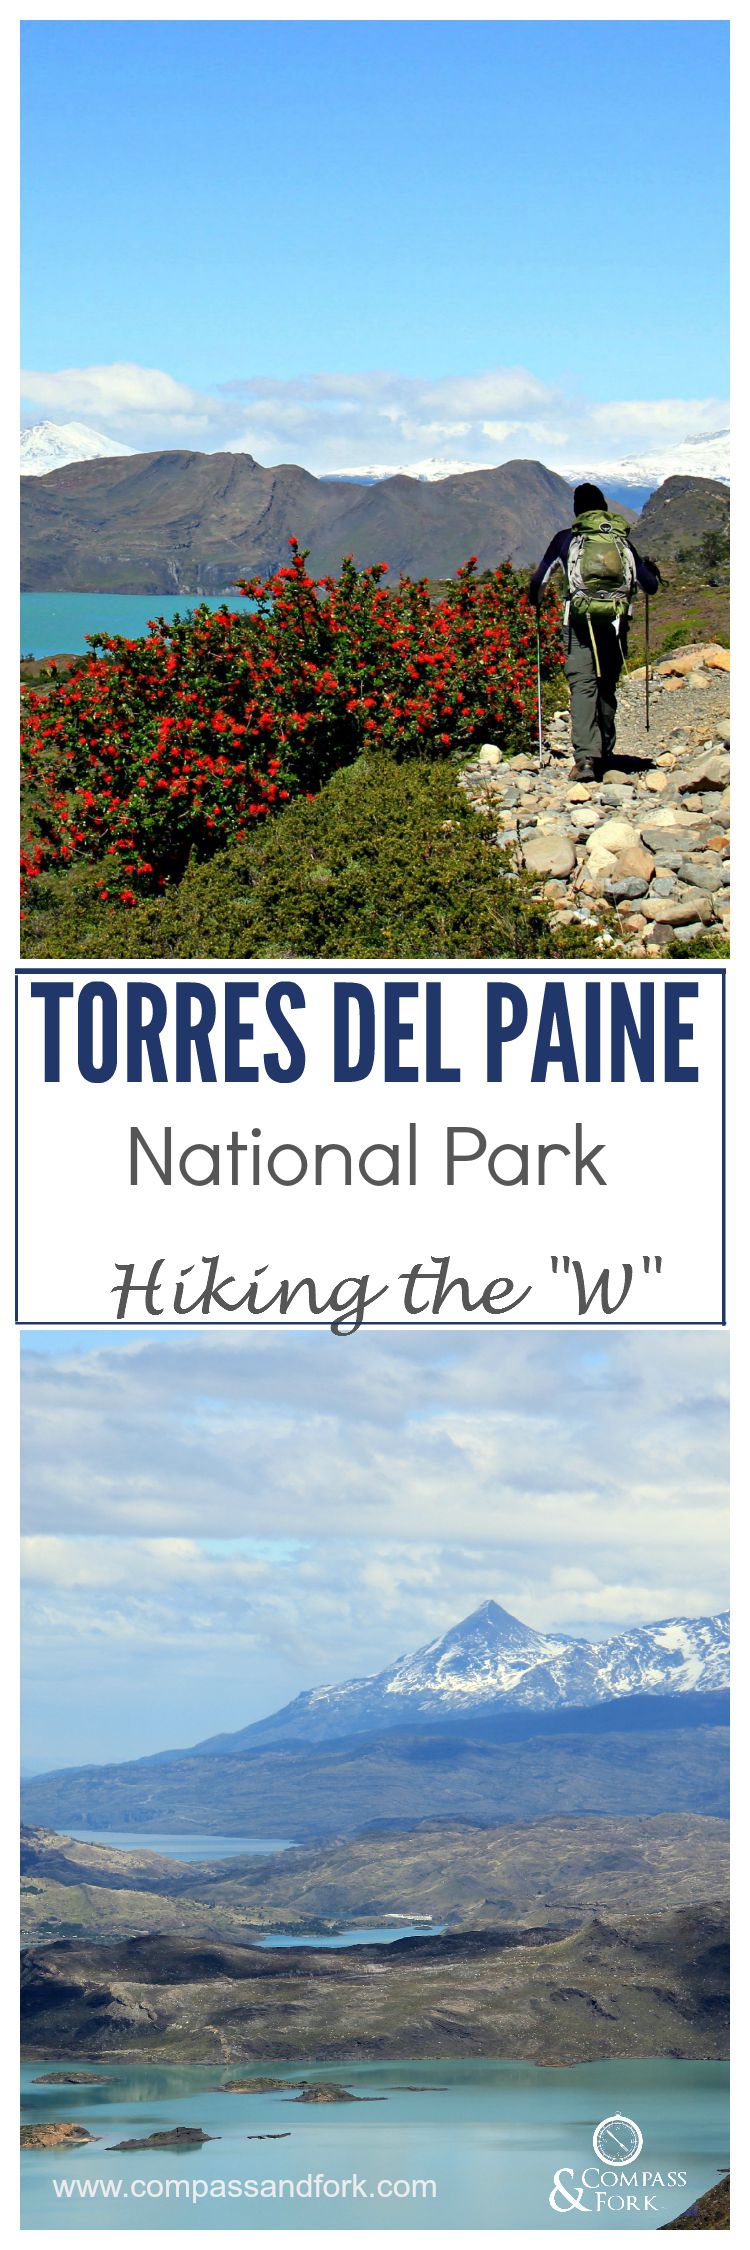 Torres Del Paine National Park Hiking the W www.compassandfork.com